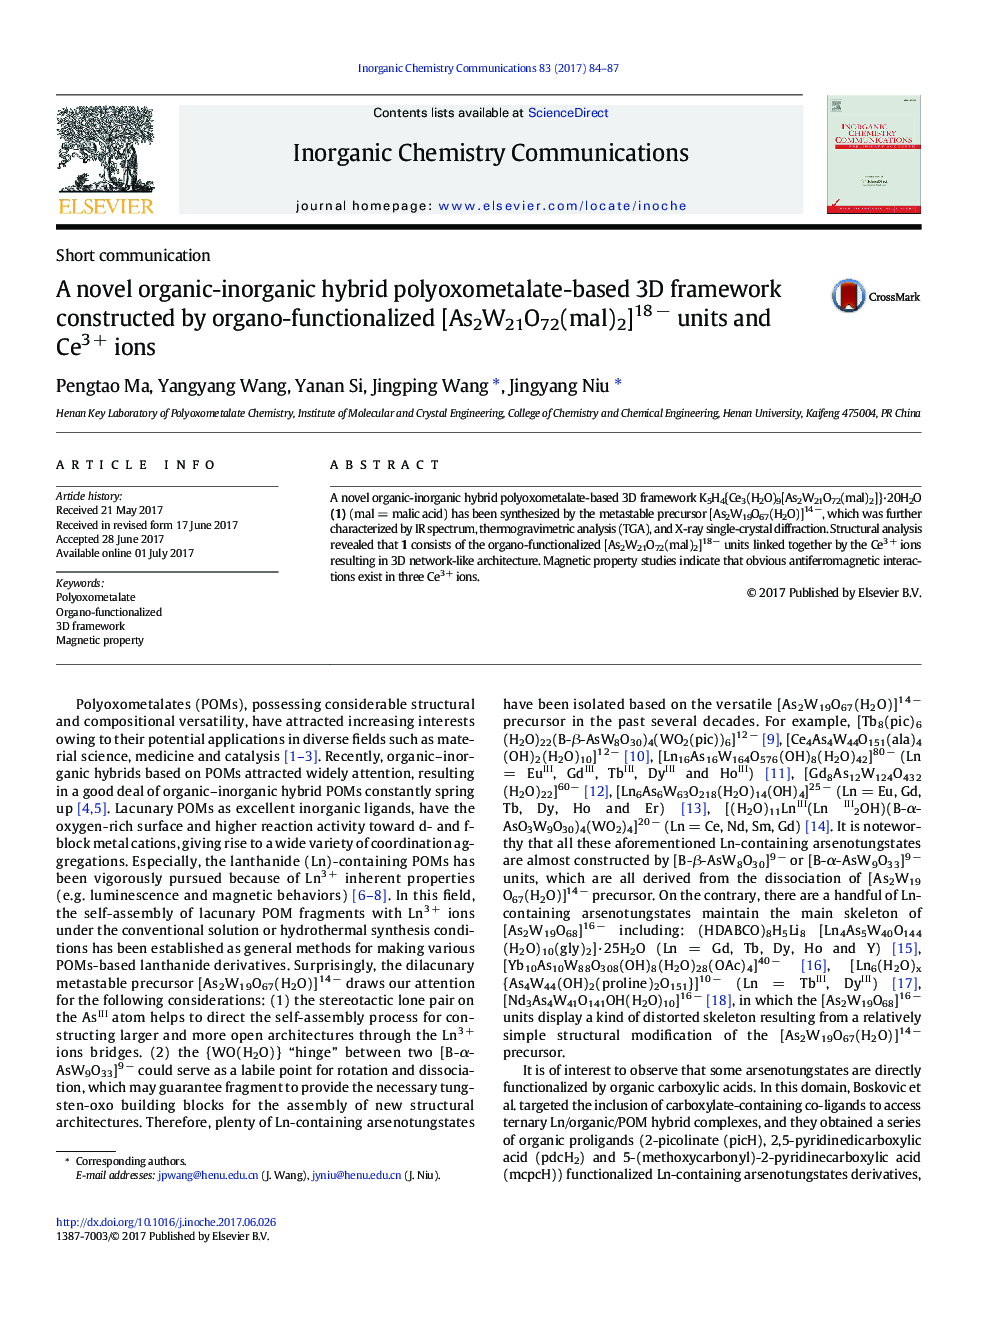 A novel organic-inorganic hybrid polyoxometalate-based 3D framework constructed by organo-functionalized [As2W21O72(mal)2]18Â â units and Ce3Â + ions